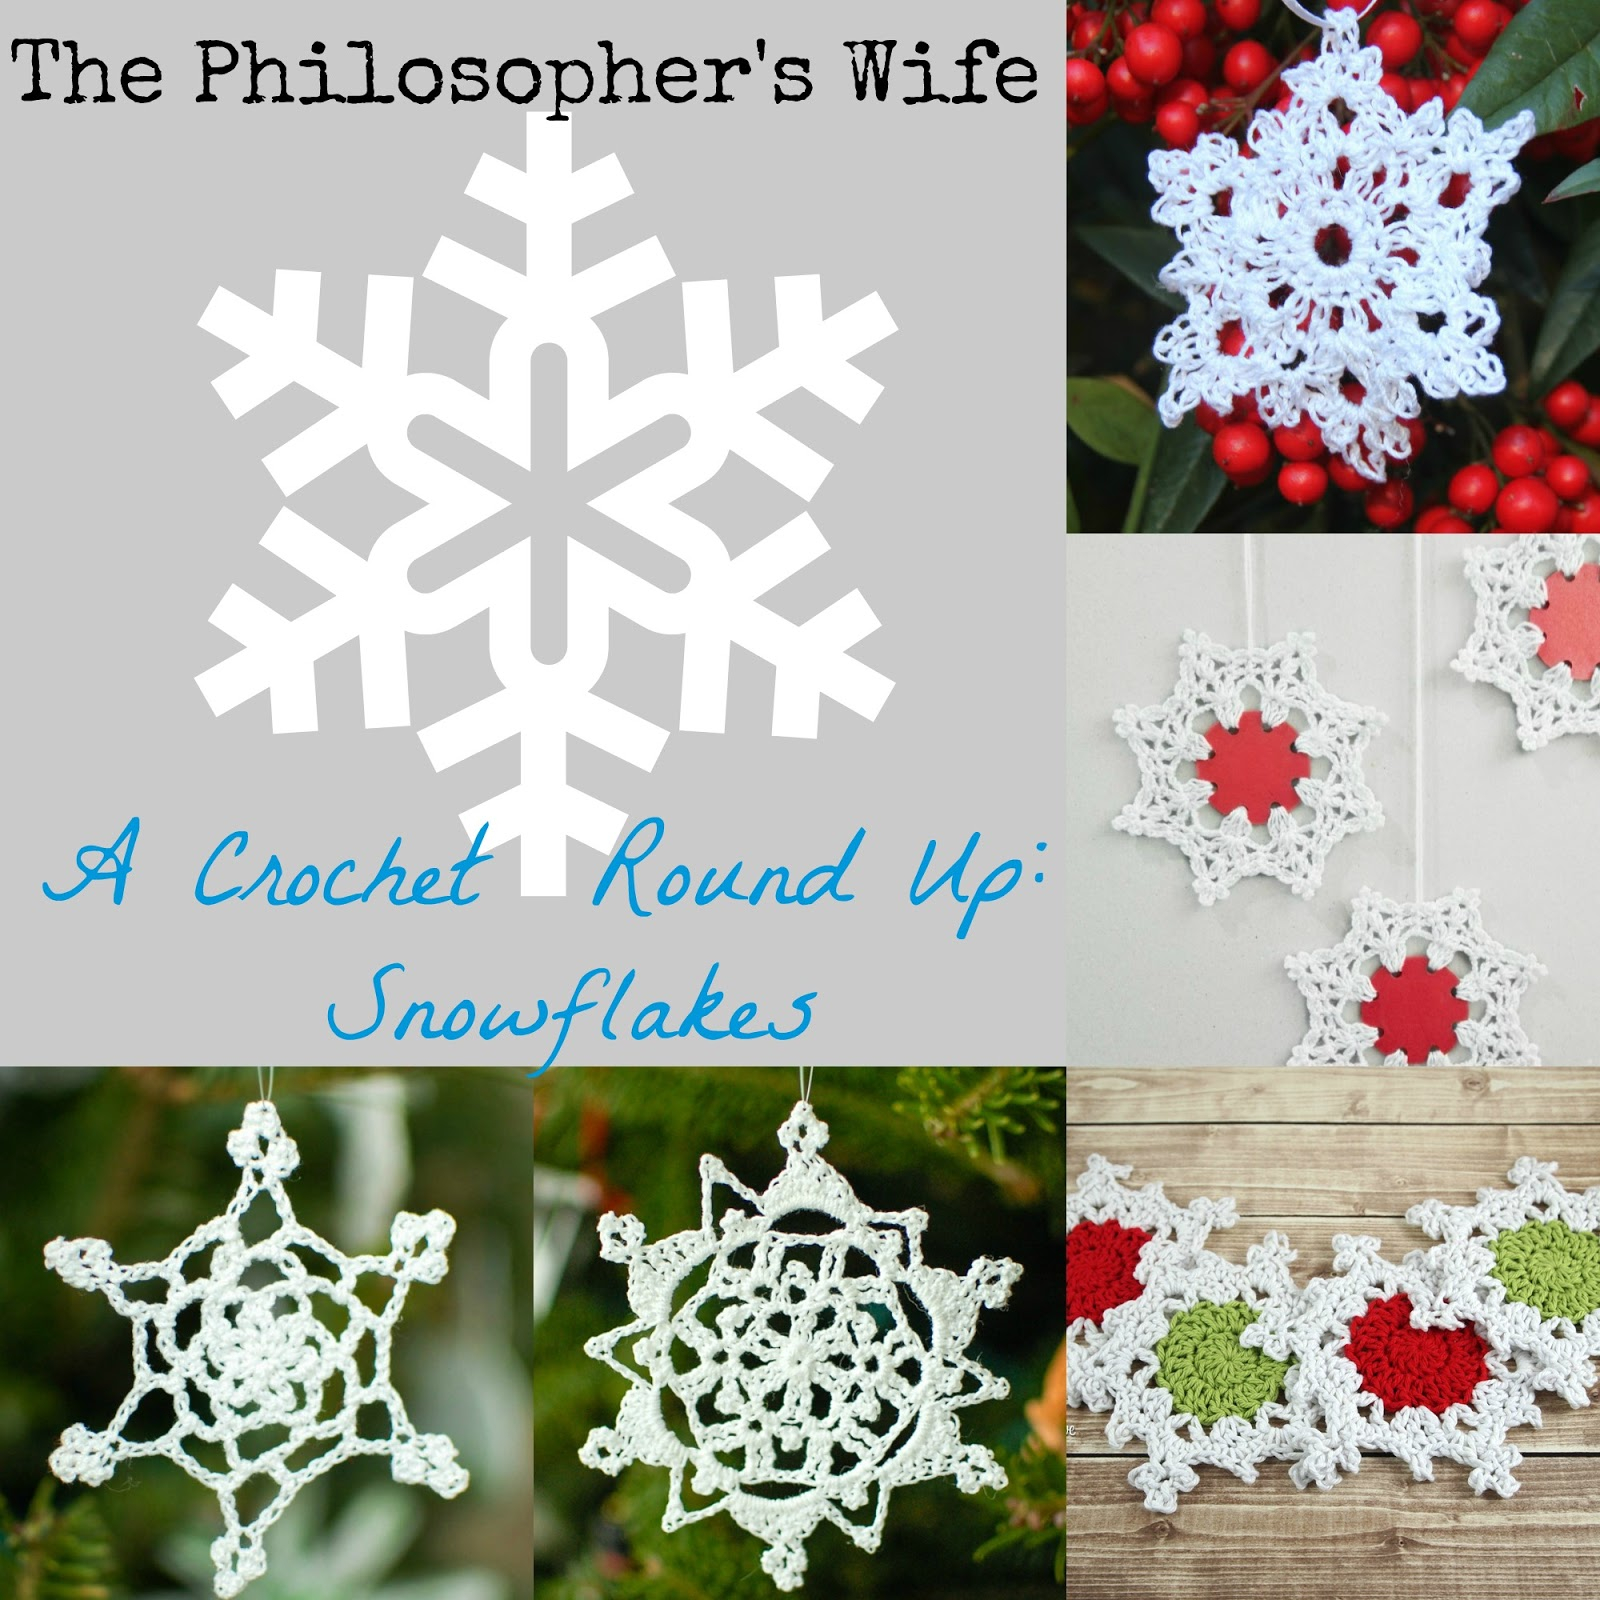 Snowflake Crochet Pattern The Philosophers Wife A Crochet Pattern Round Up Snowflakes